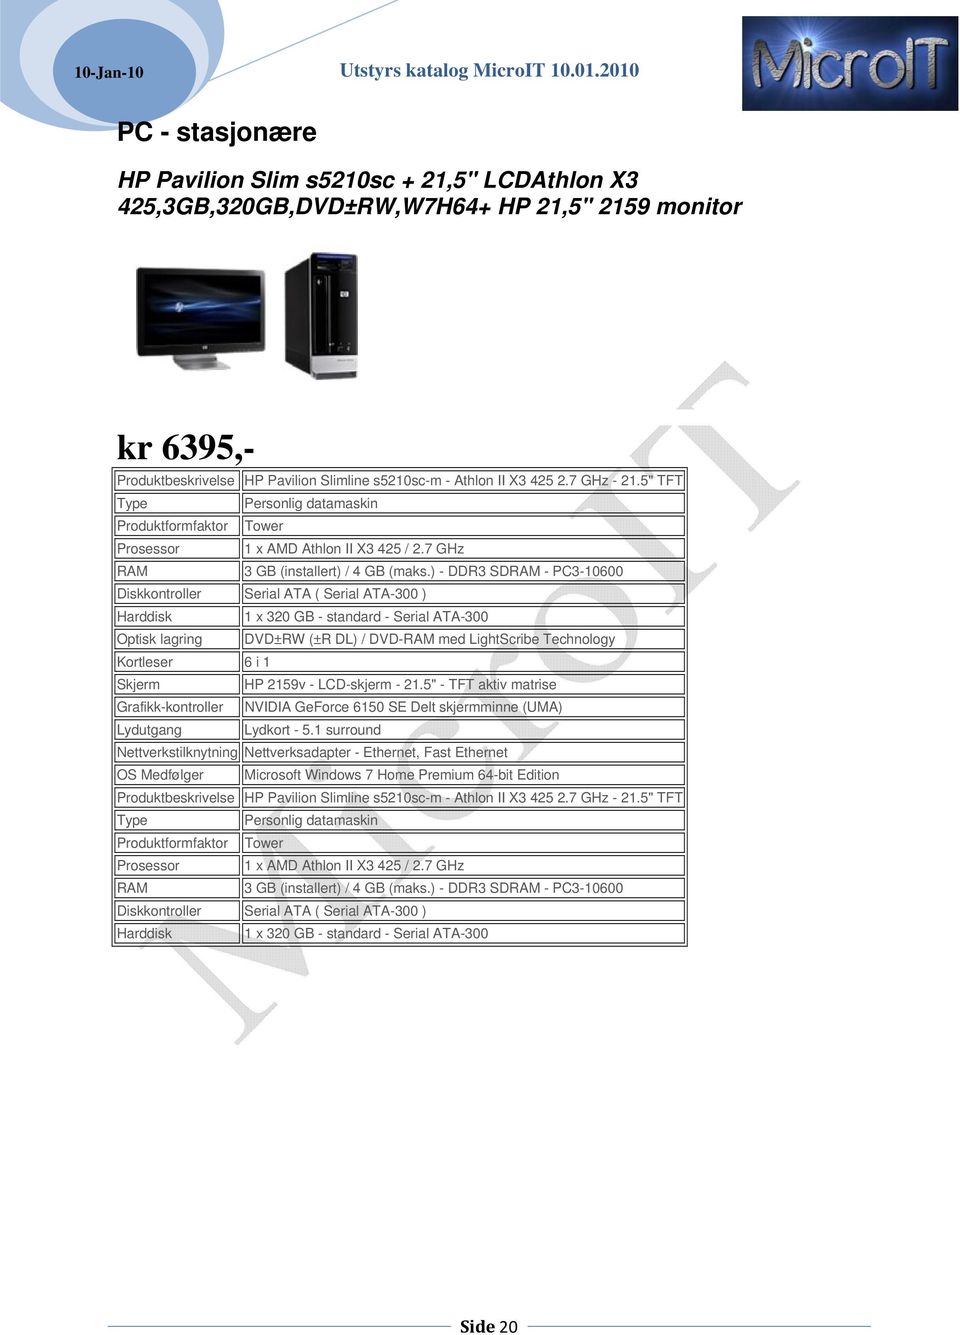 ) - DDR3 SDRAM - PC3-10600 Diskkontroller Serial ATA ( Serial ATA-300 ) Harddisk 1 x 320 GB - standard - Serial ATA-300 Optisk lagring DVD±RW (±R DL) / DVD-RAM med LightScribe Technology Kortleser 6